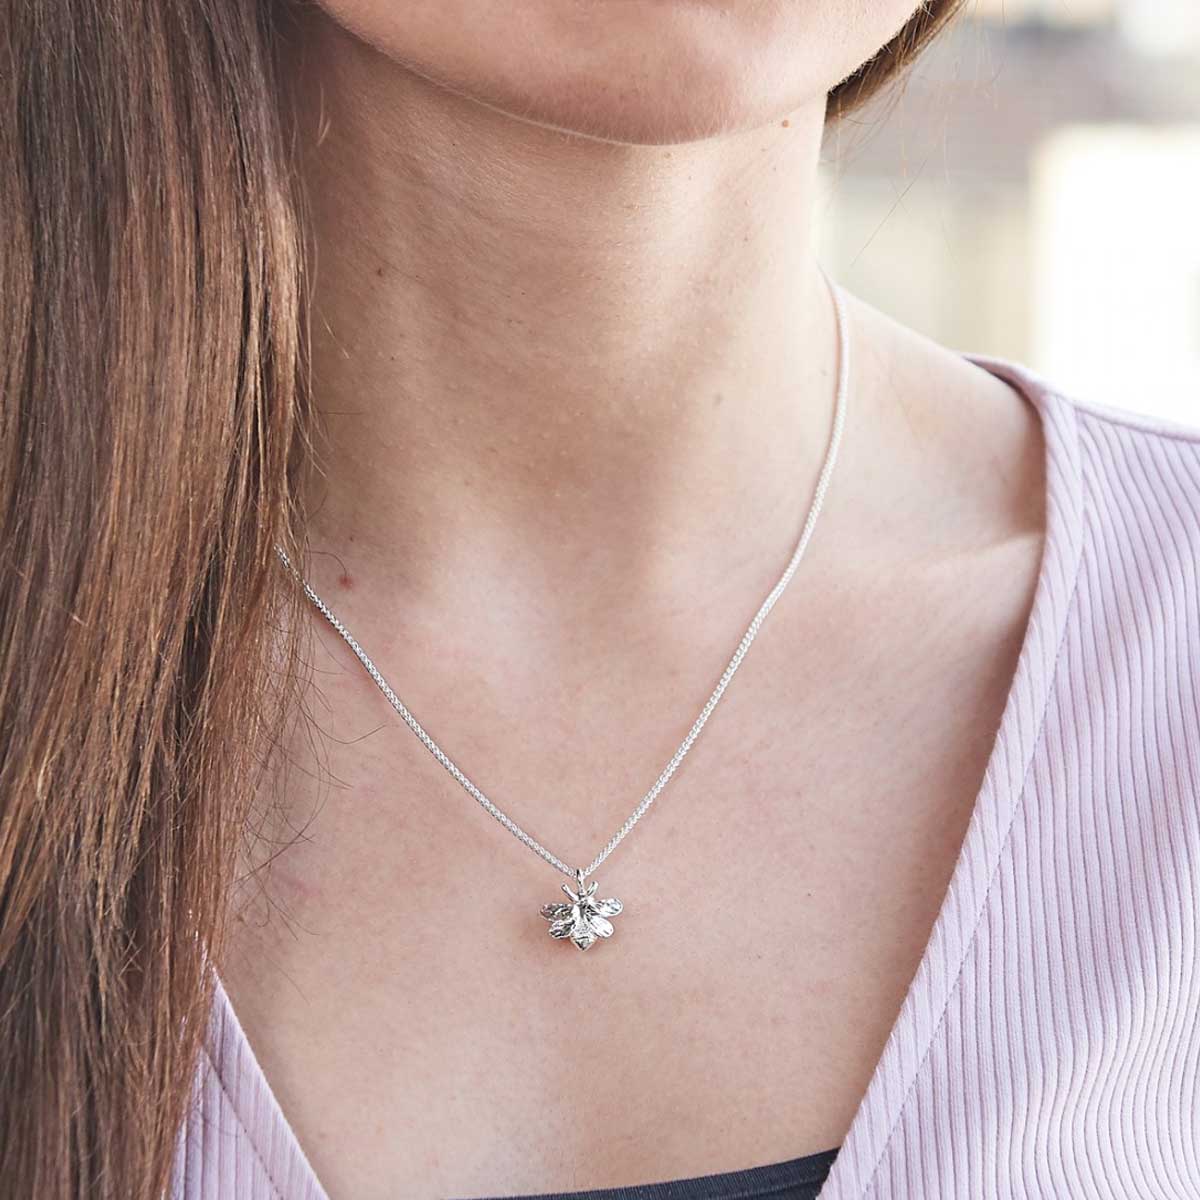 Solid silver bumble bee pendant necklace Brighton designer Scarlett Jewellery